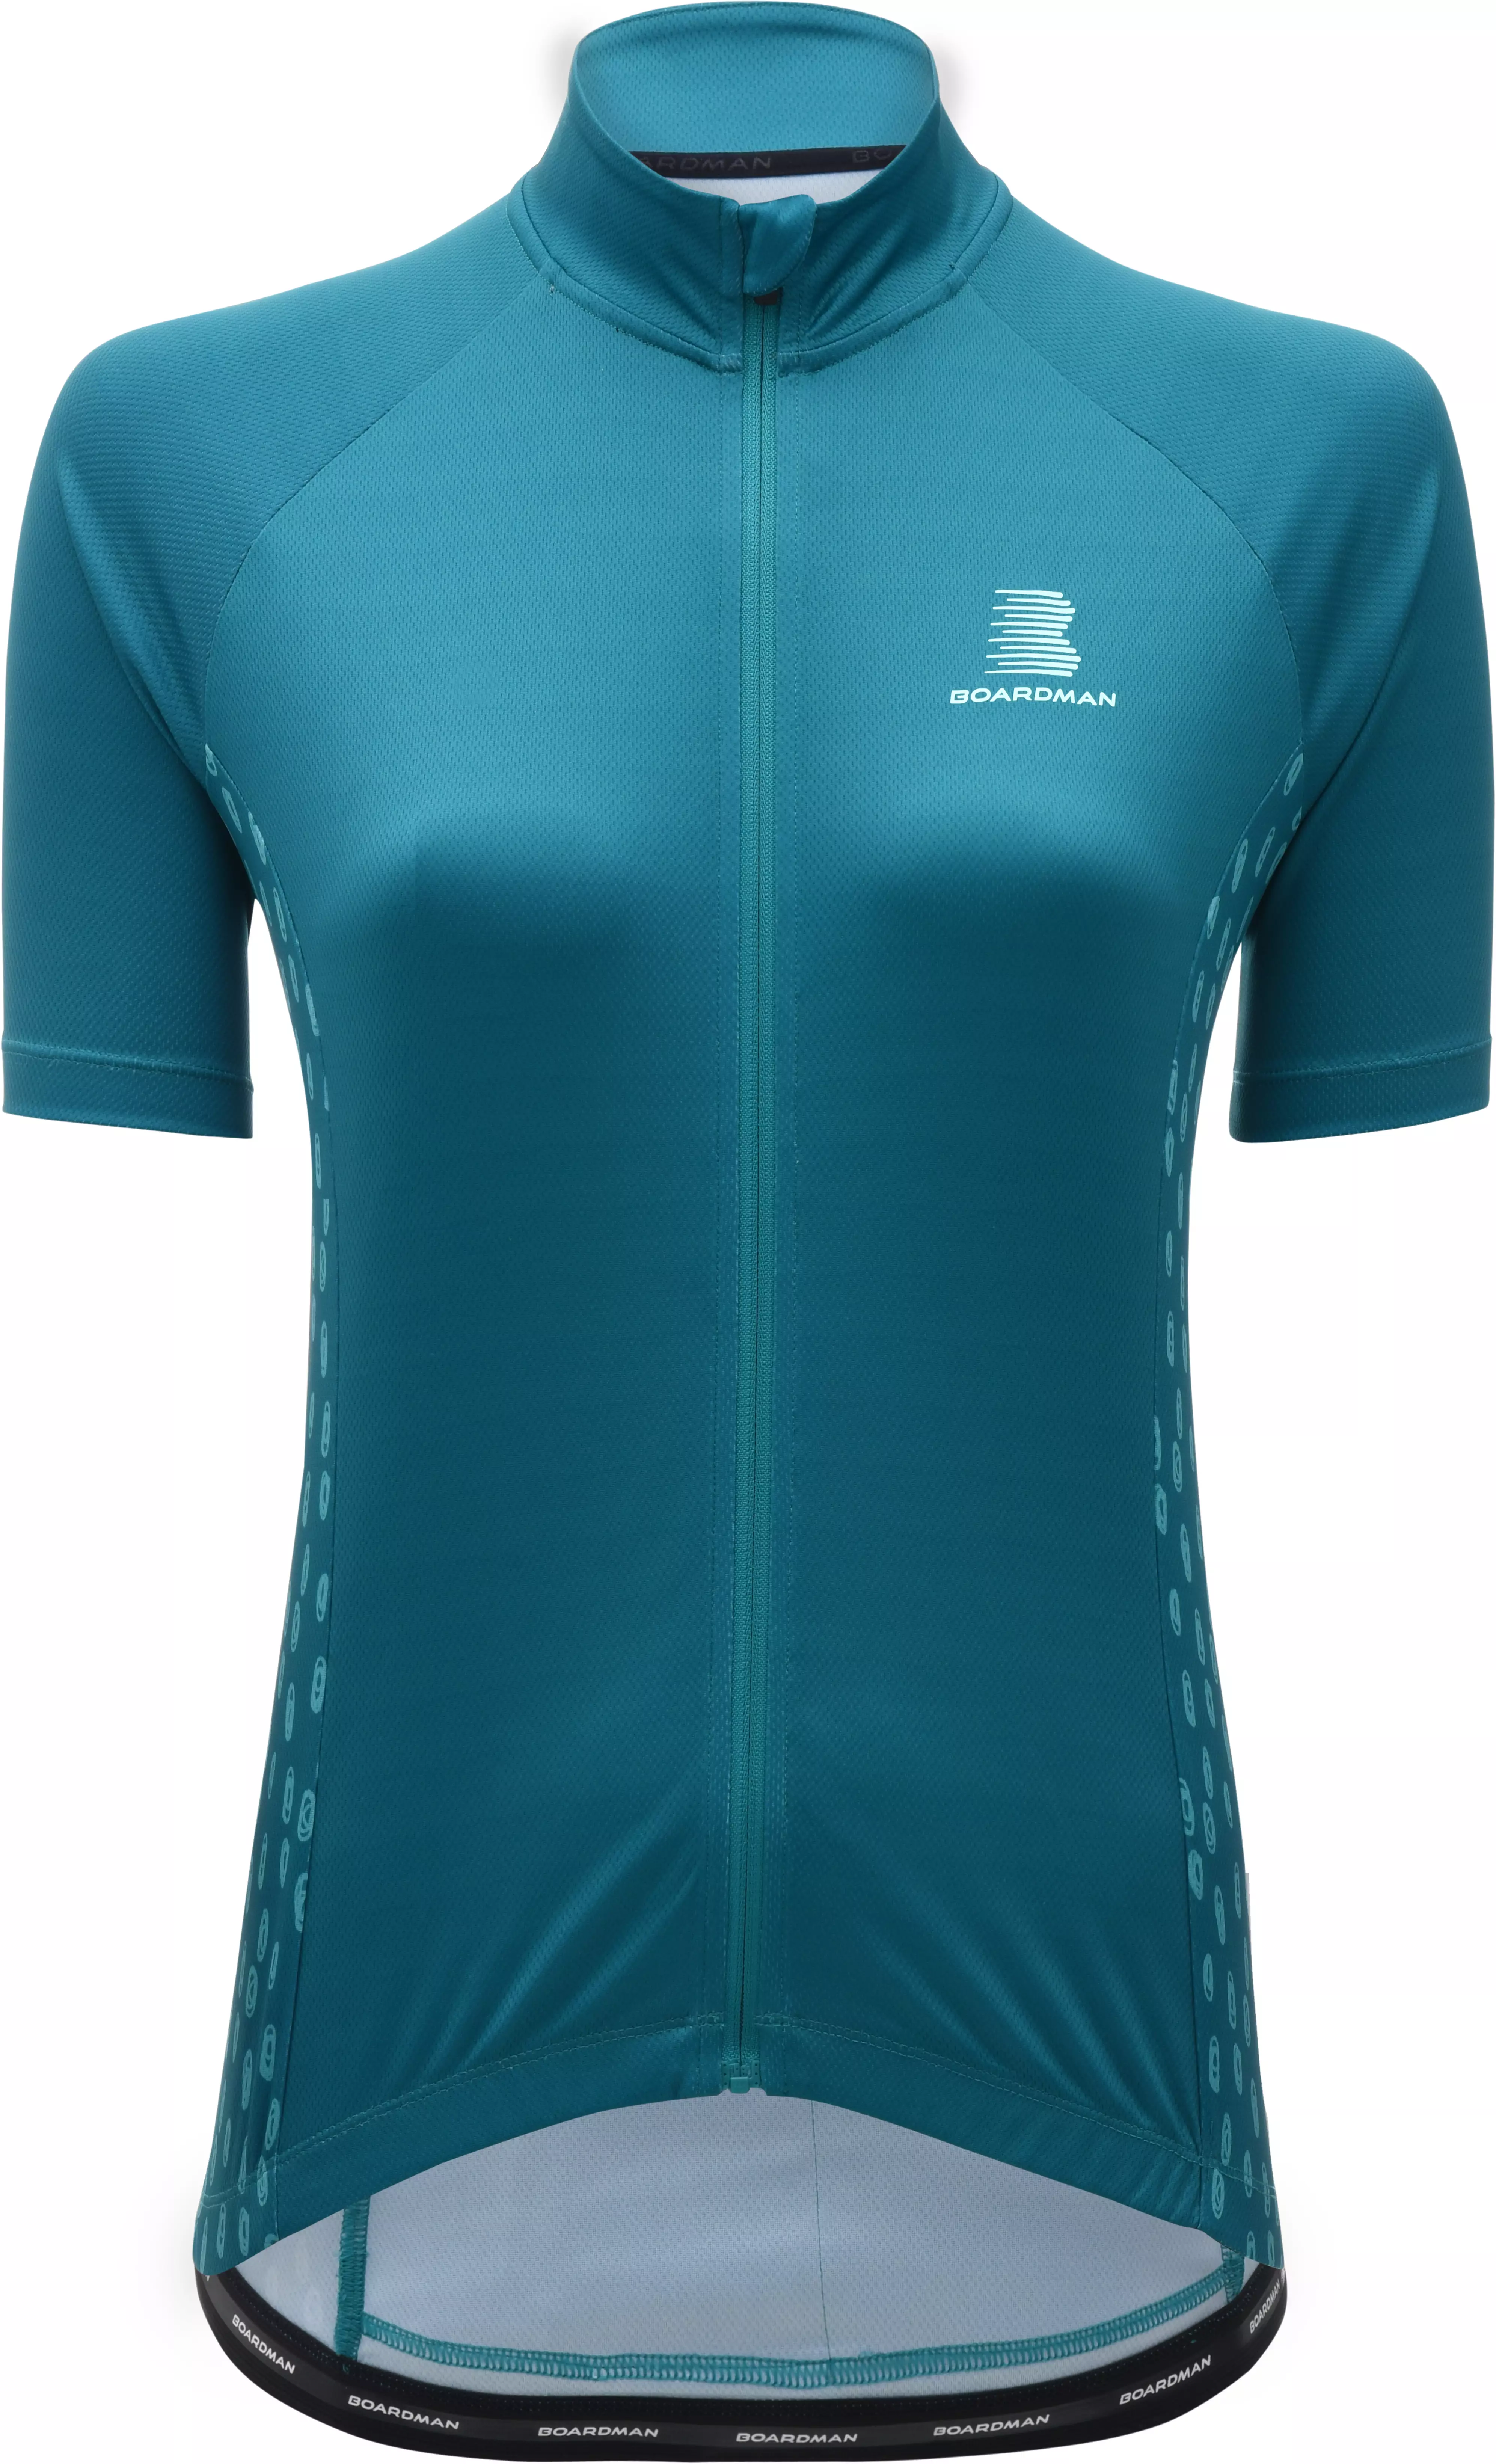 women's blue cycling jersey